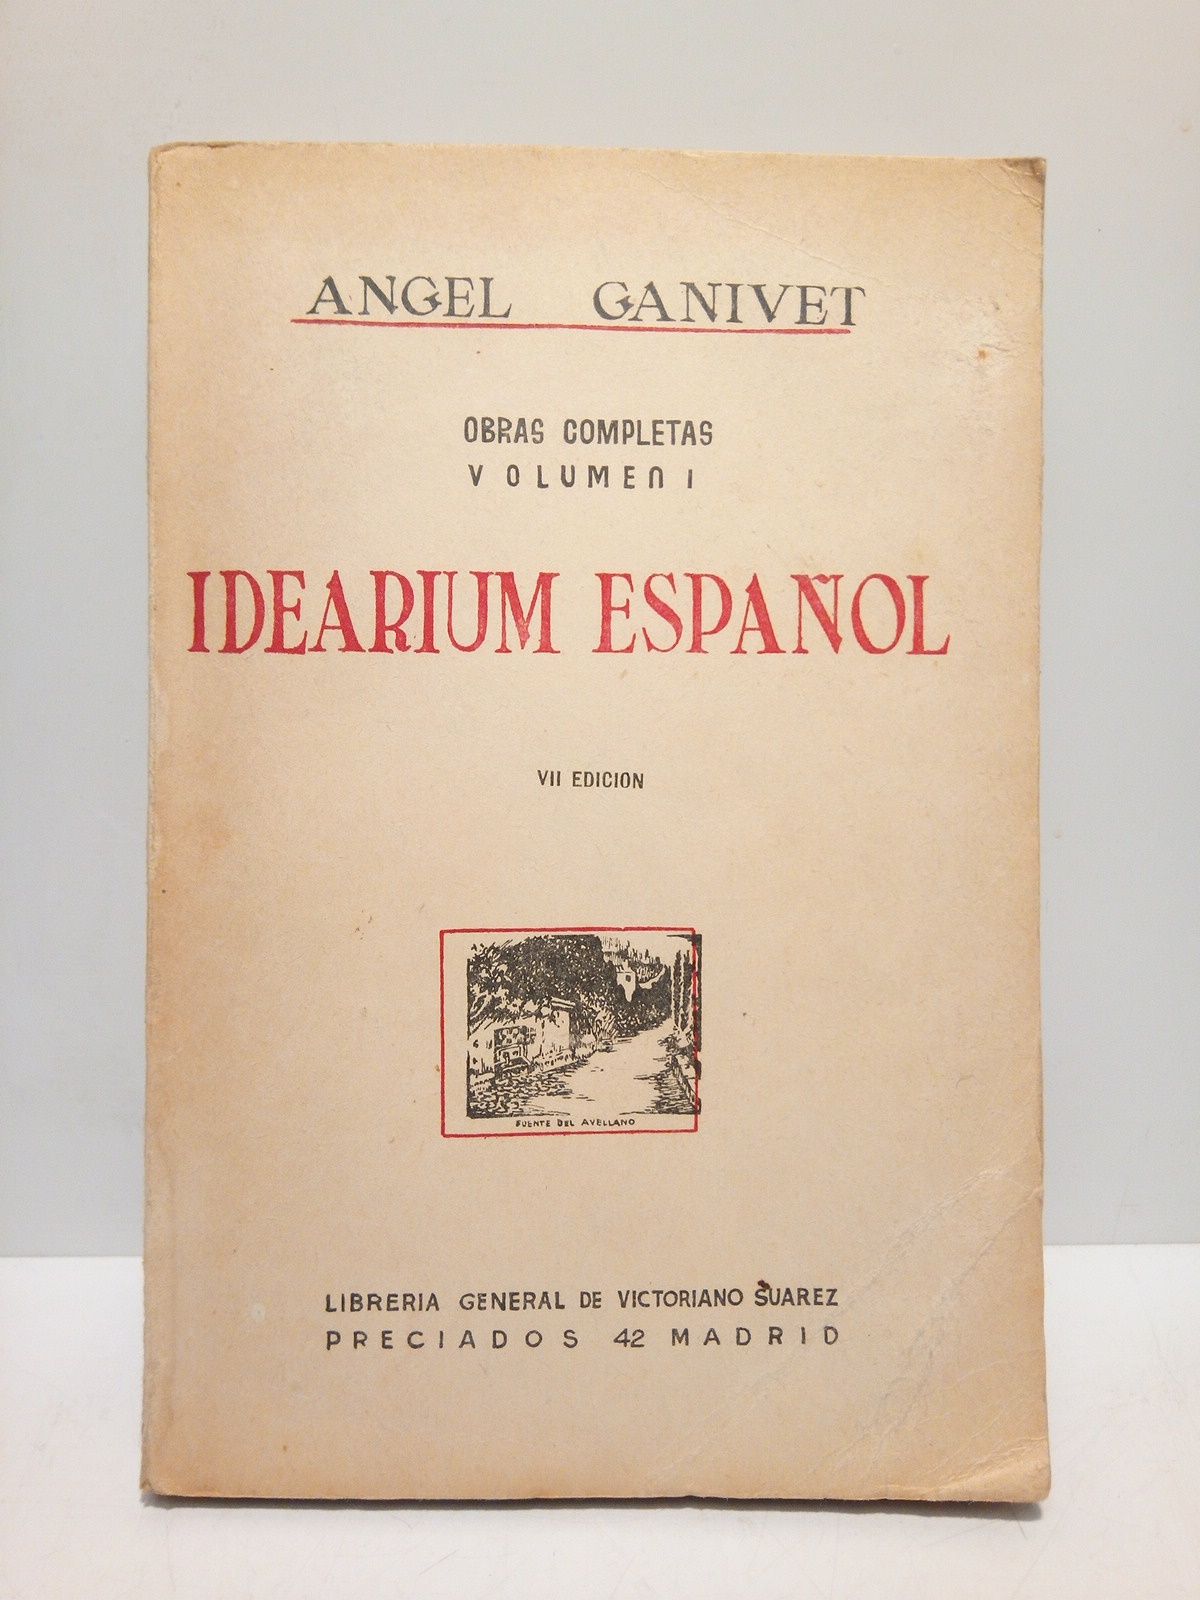 GANIVET, Angel - Idearium Espaol